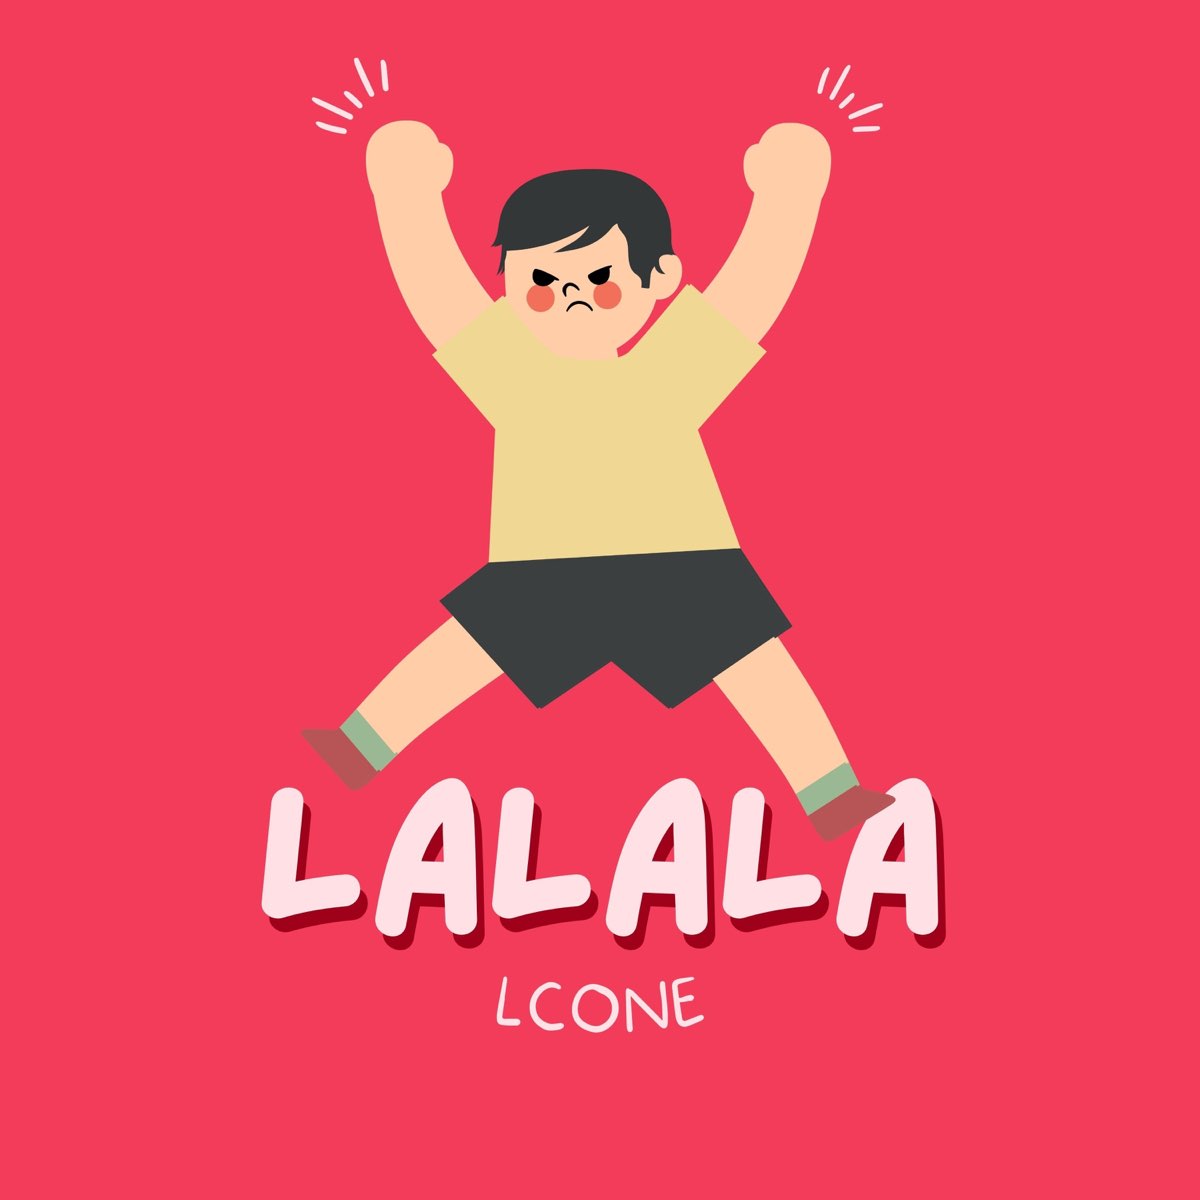 Around lalala. Lalala. Lalala okokok ава. Lalala okokok стили. Lalala logo.